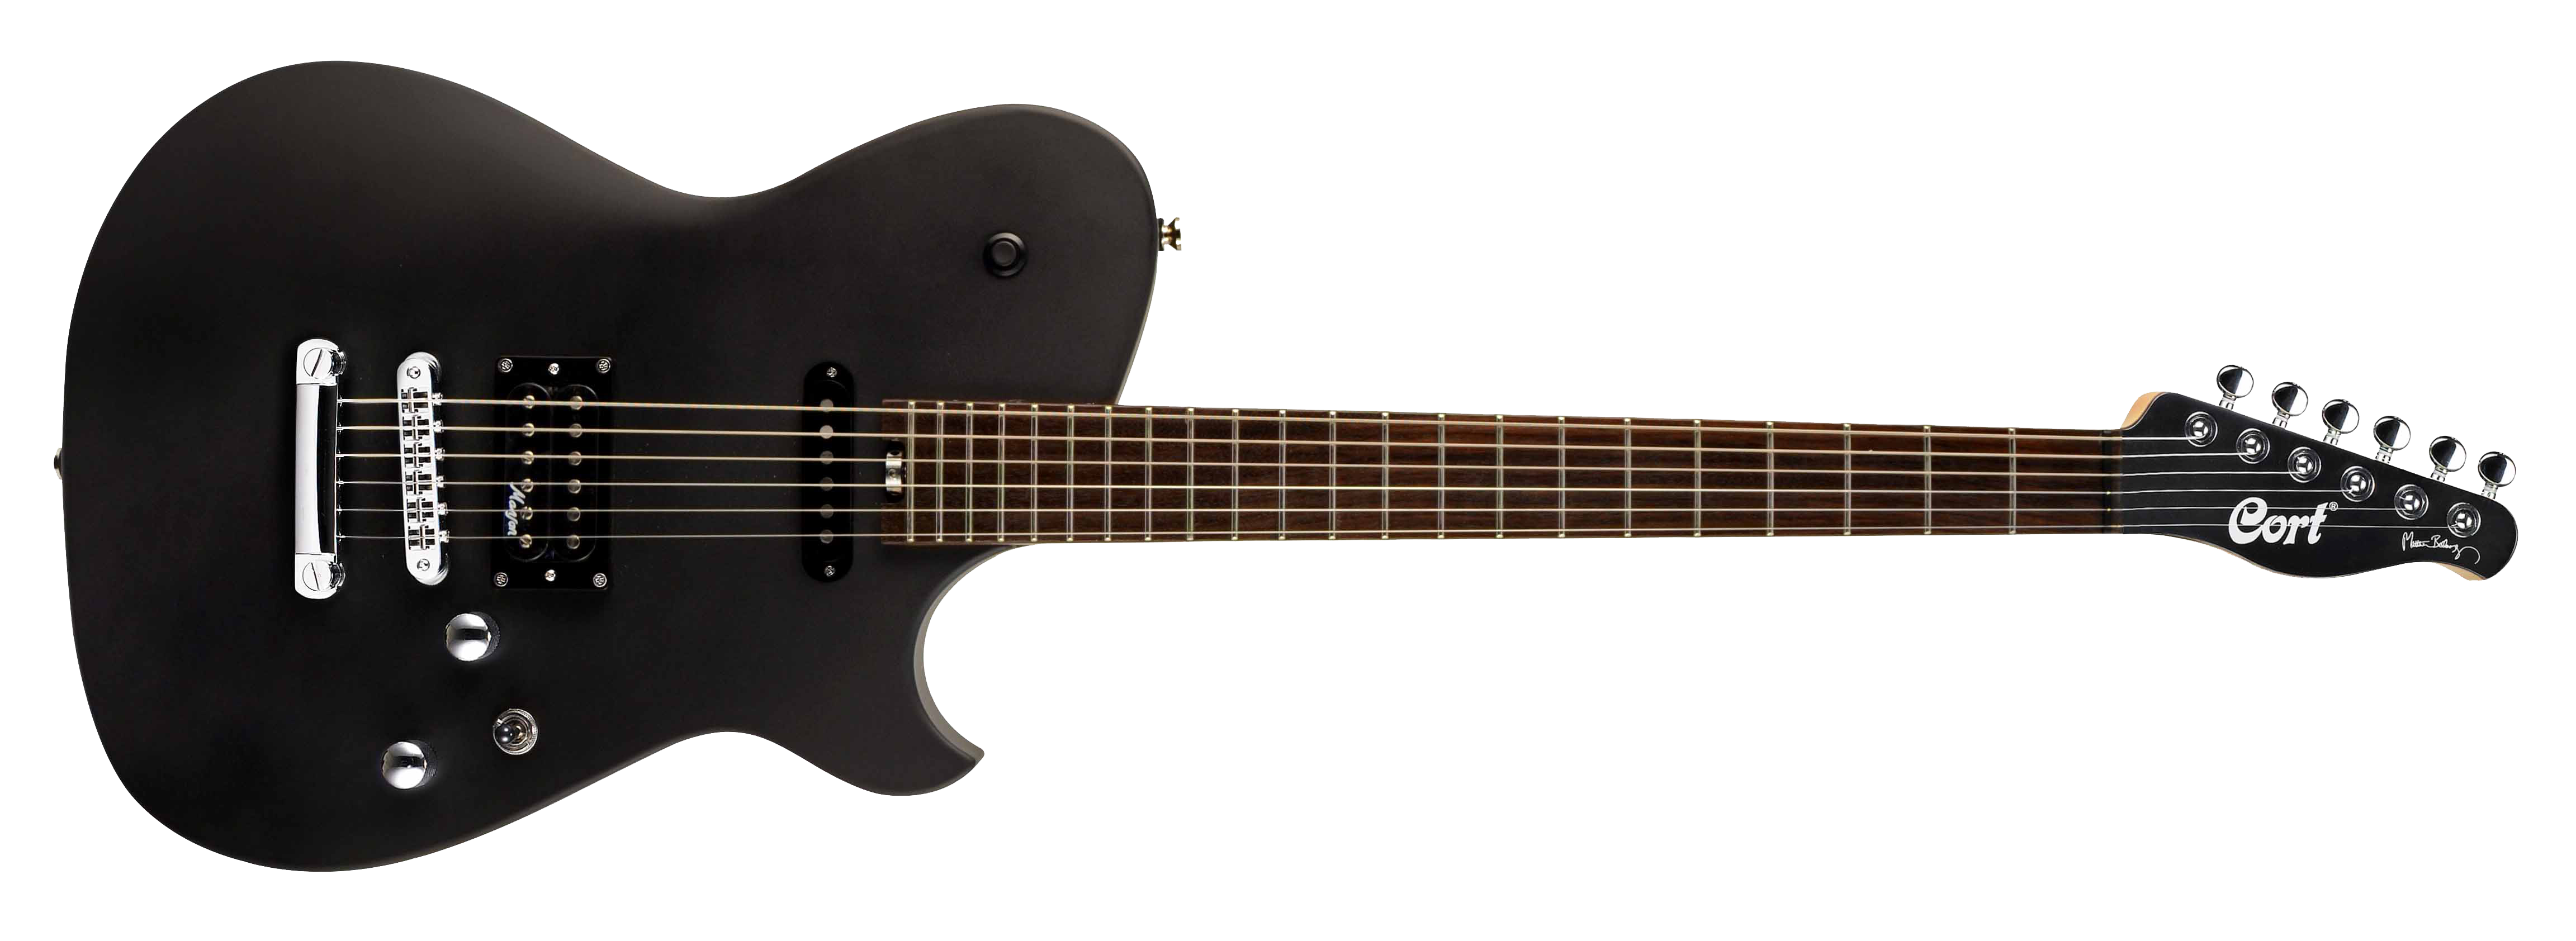 Electric Guitar Black PNG Image